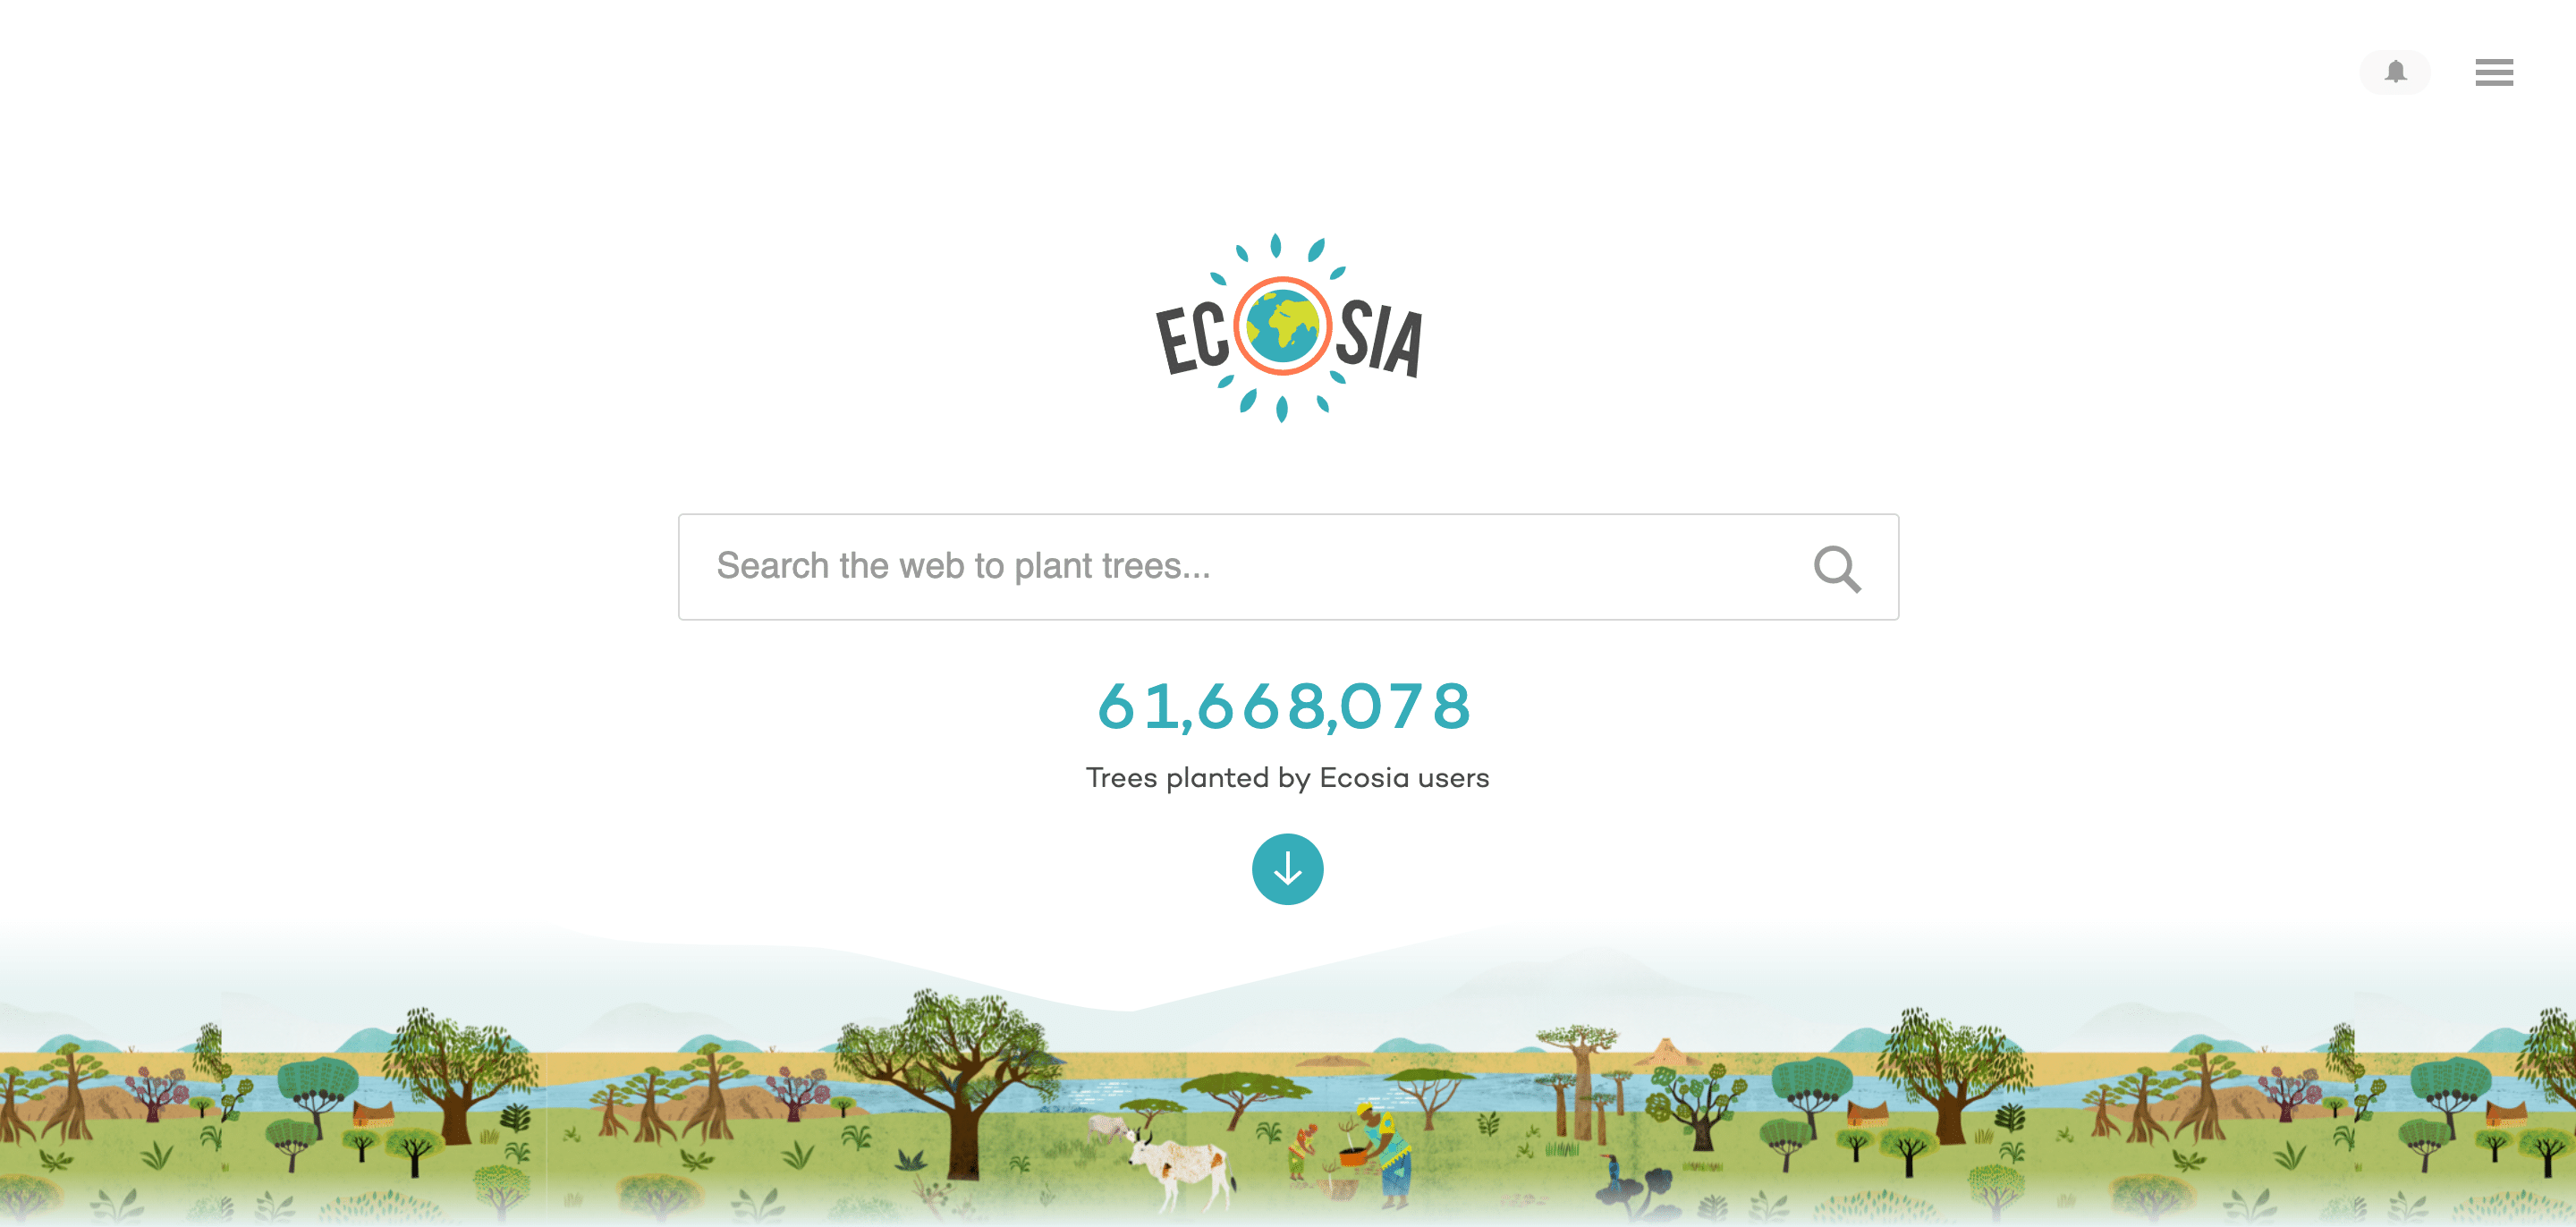 Moteur de recherche Ecosia